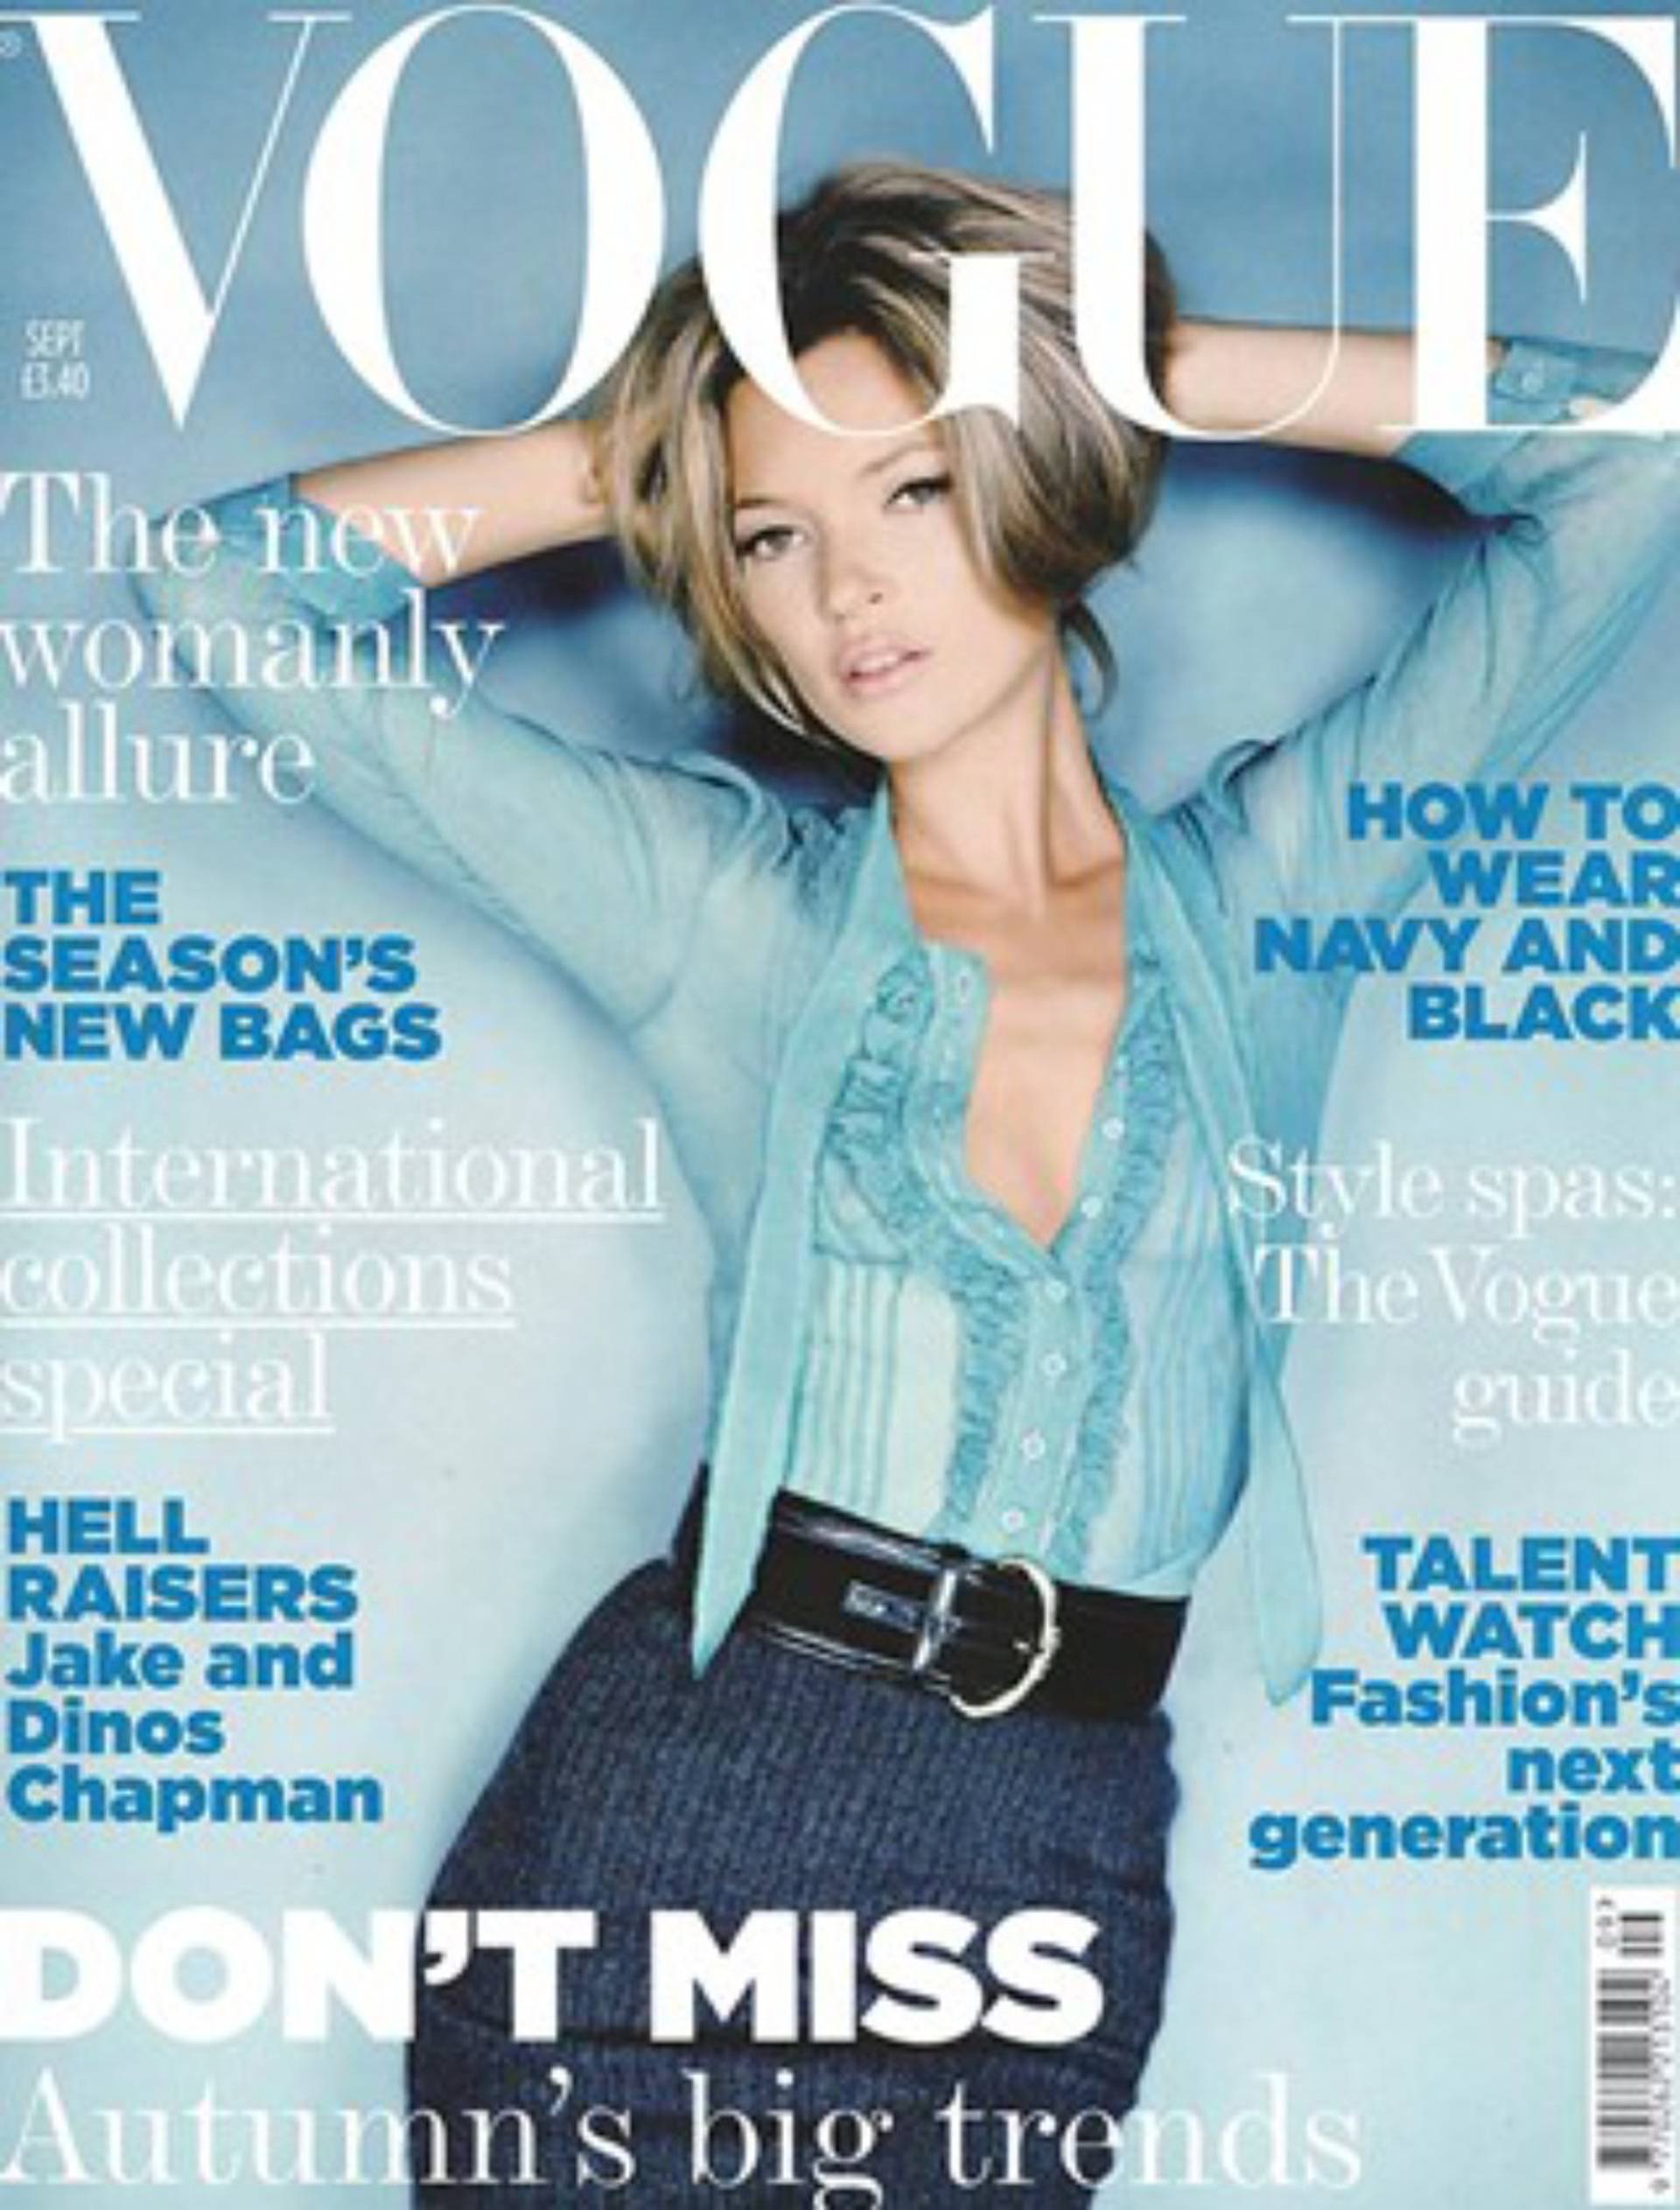 Журнал вог сайт. Кейт Мосс обложка Вог. Кейт Мосс 2005. Kate Moss журнал. Кейт Мосс Вог первая обложка.